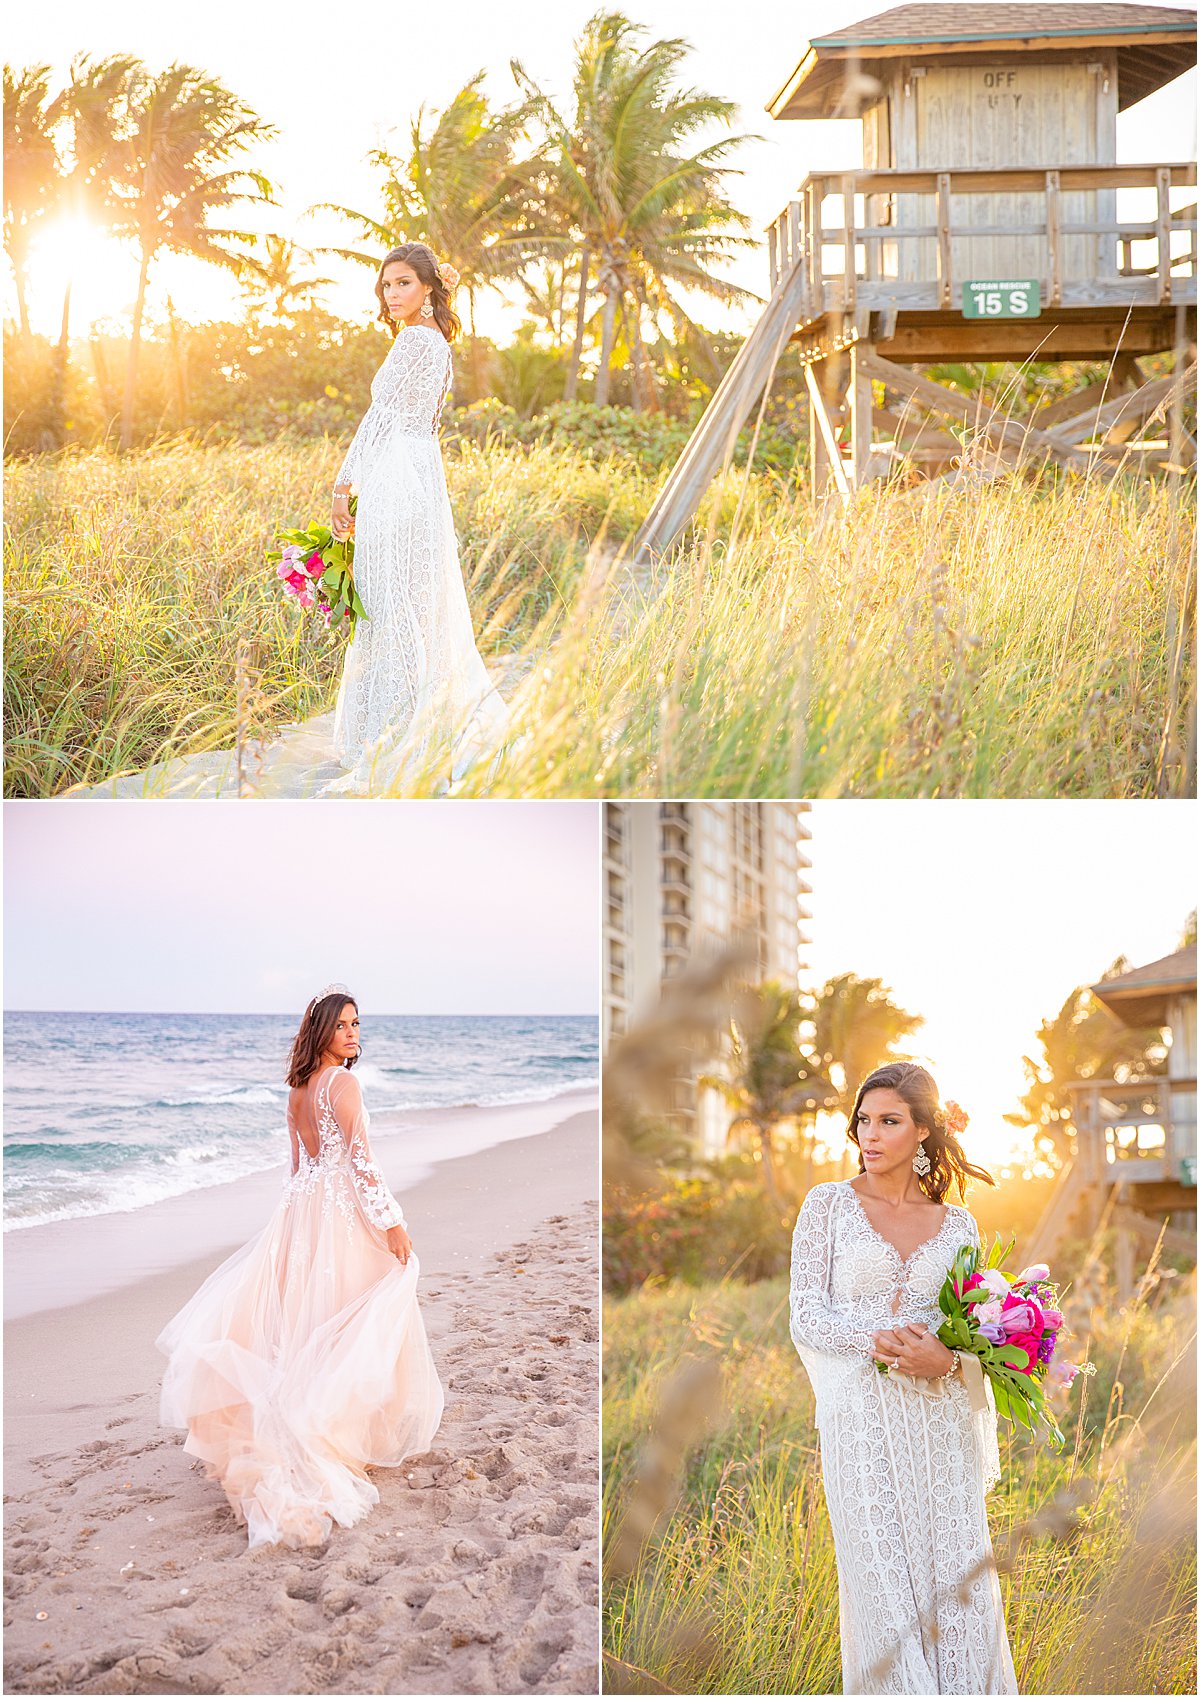 Tropical Chic Wedding Sunset Photos | Marriott Singer Island | Palm Beach, FL | Married in Palm Beach | www.marriedinpalmbeach.com | Krystal Zaskey Photography